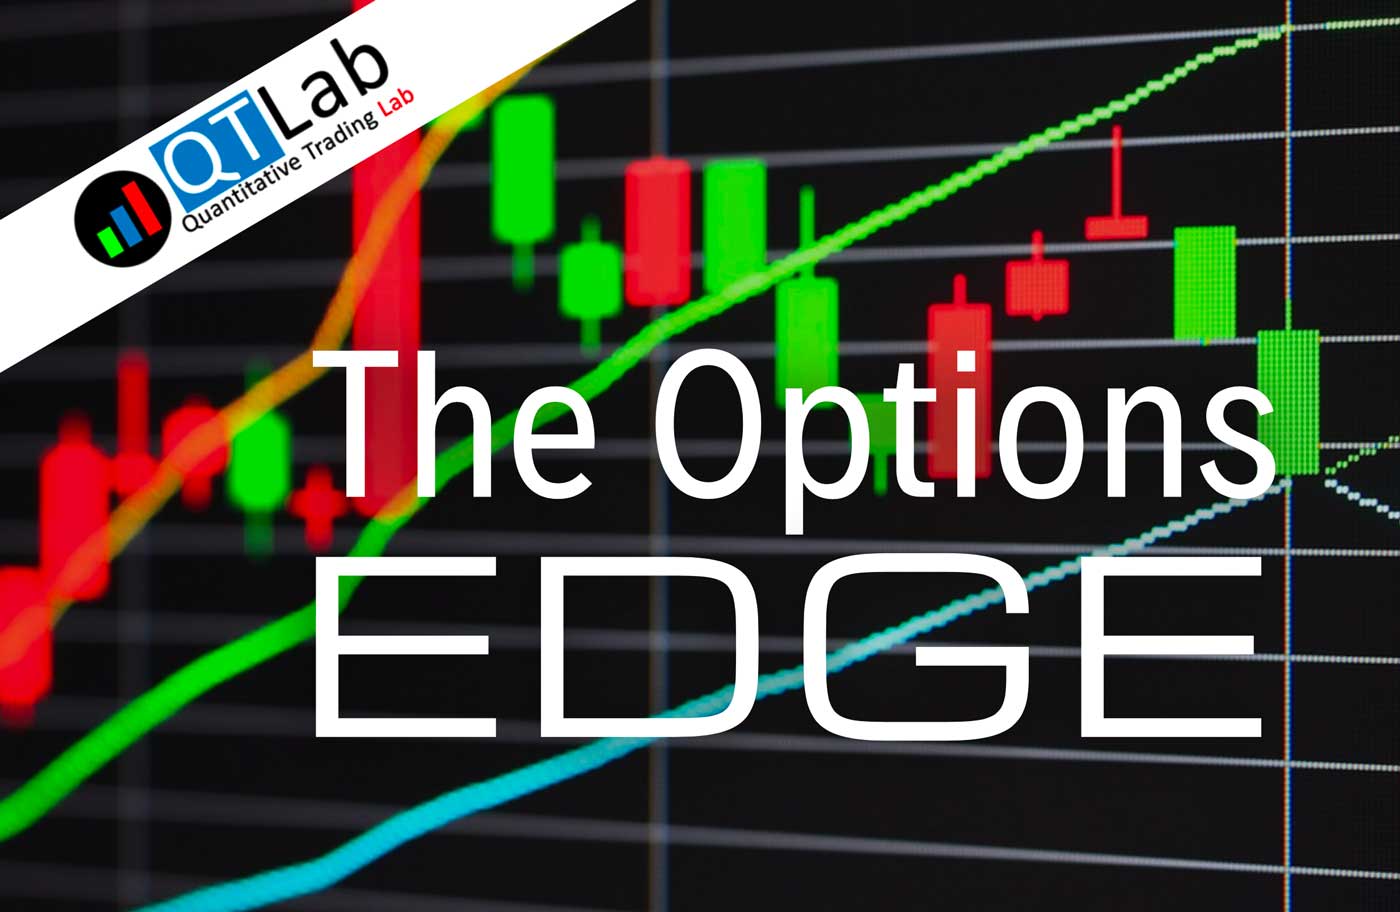 corso the option edge,corso trading opzioni, corso opzioni, trading in opzioni, opzioni trading, corsi opzioni, trading con le opzioni